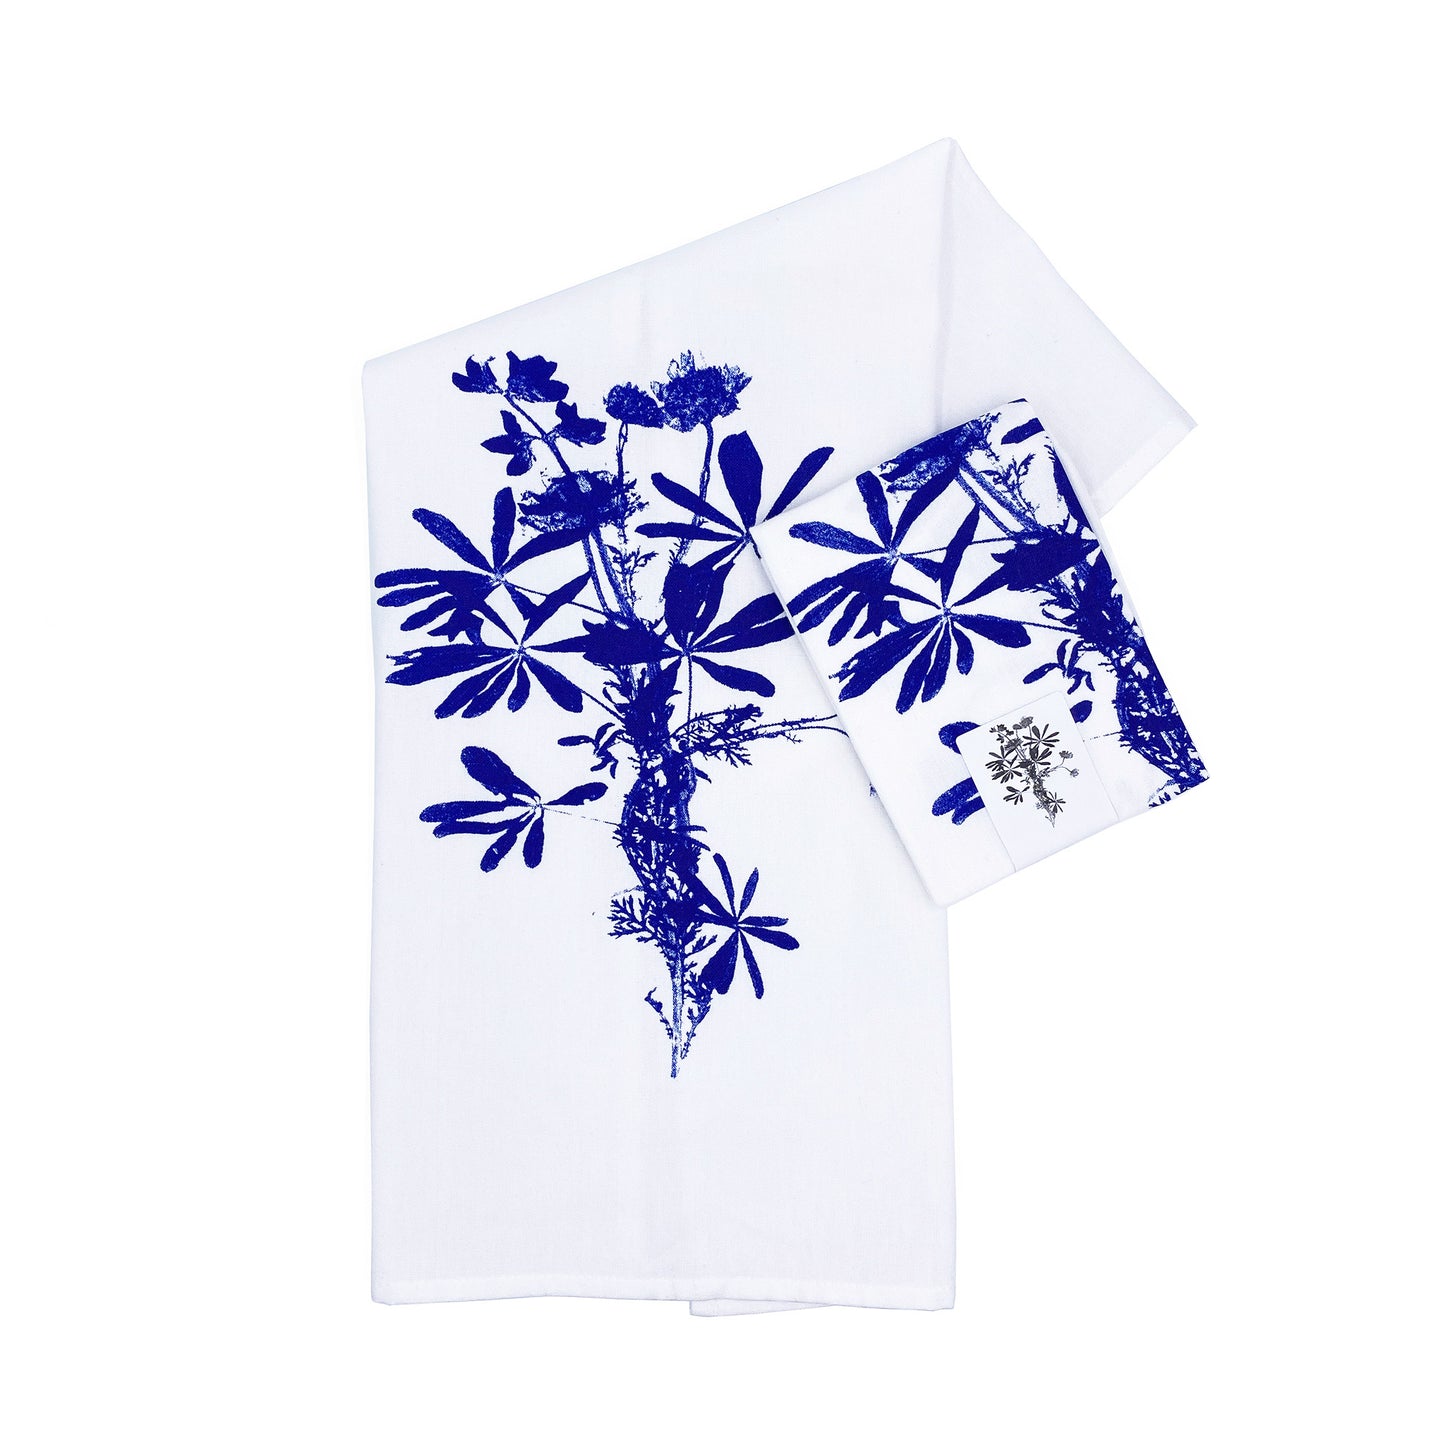 WILDFLOWERS BLUEBONNET BOUQUET Hand Printed Artisan Towel